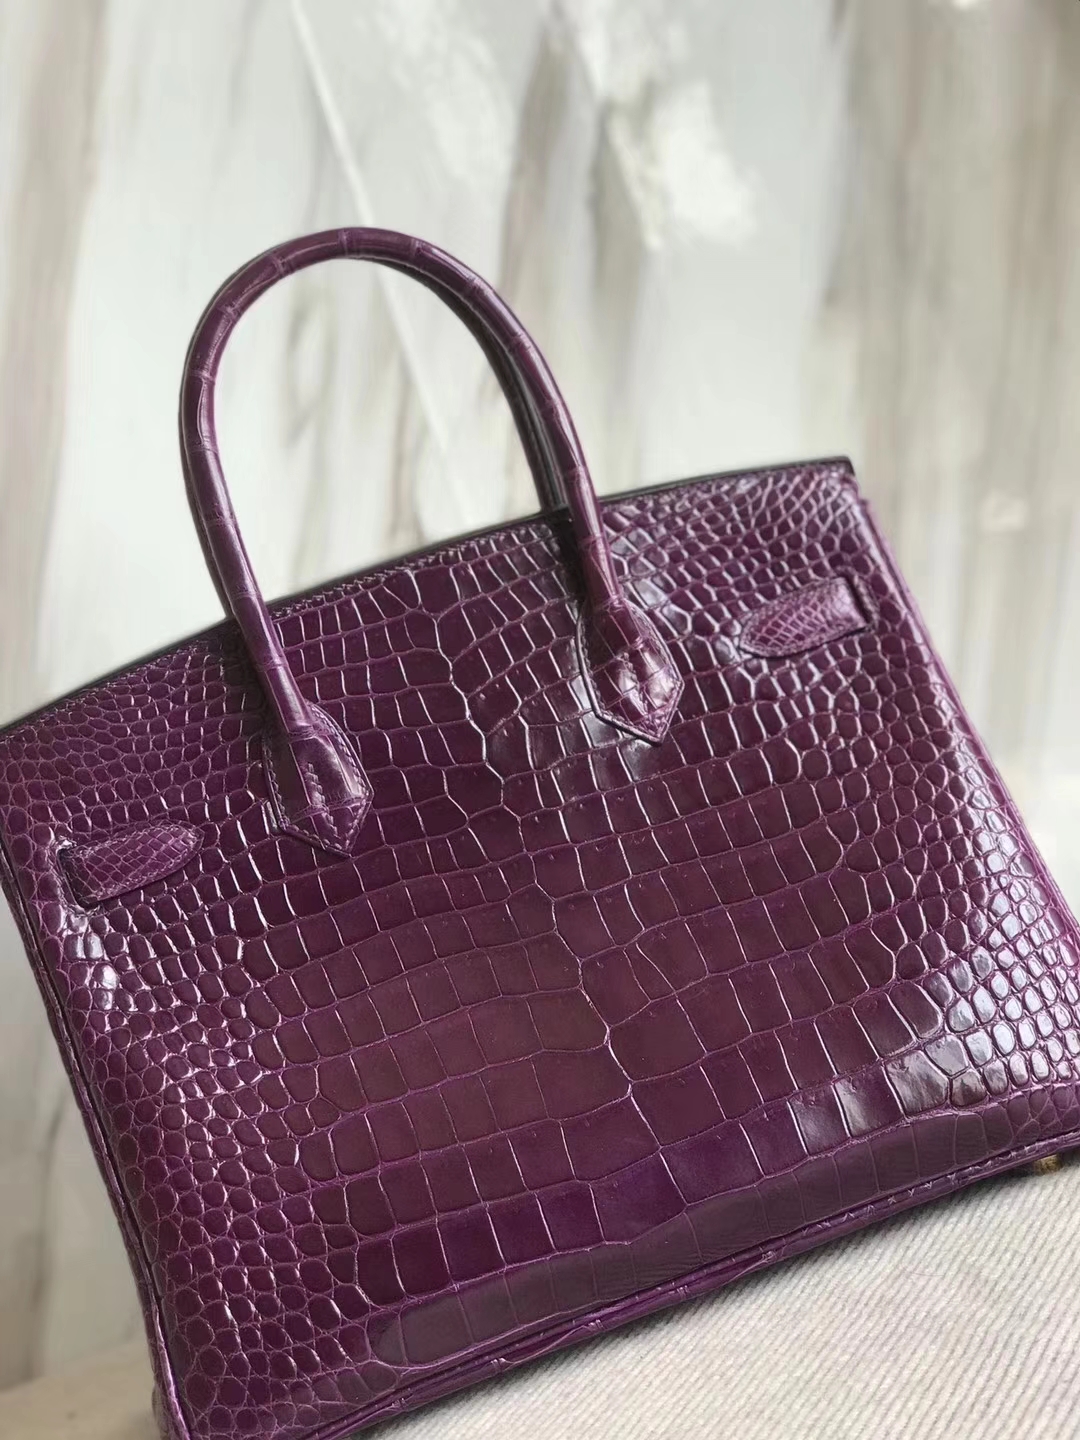 Luxury Hermes 9G Amethyst Purple Shiny Crocodile Leather Birkin30CM Bag Gold Hardware